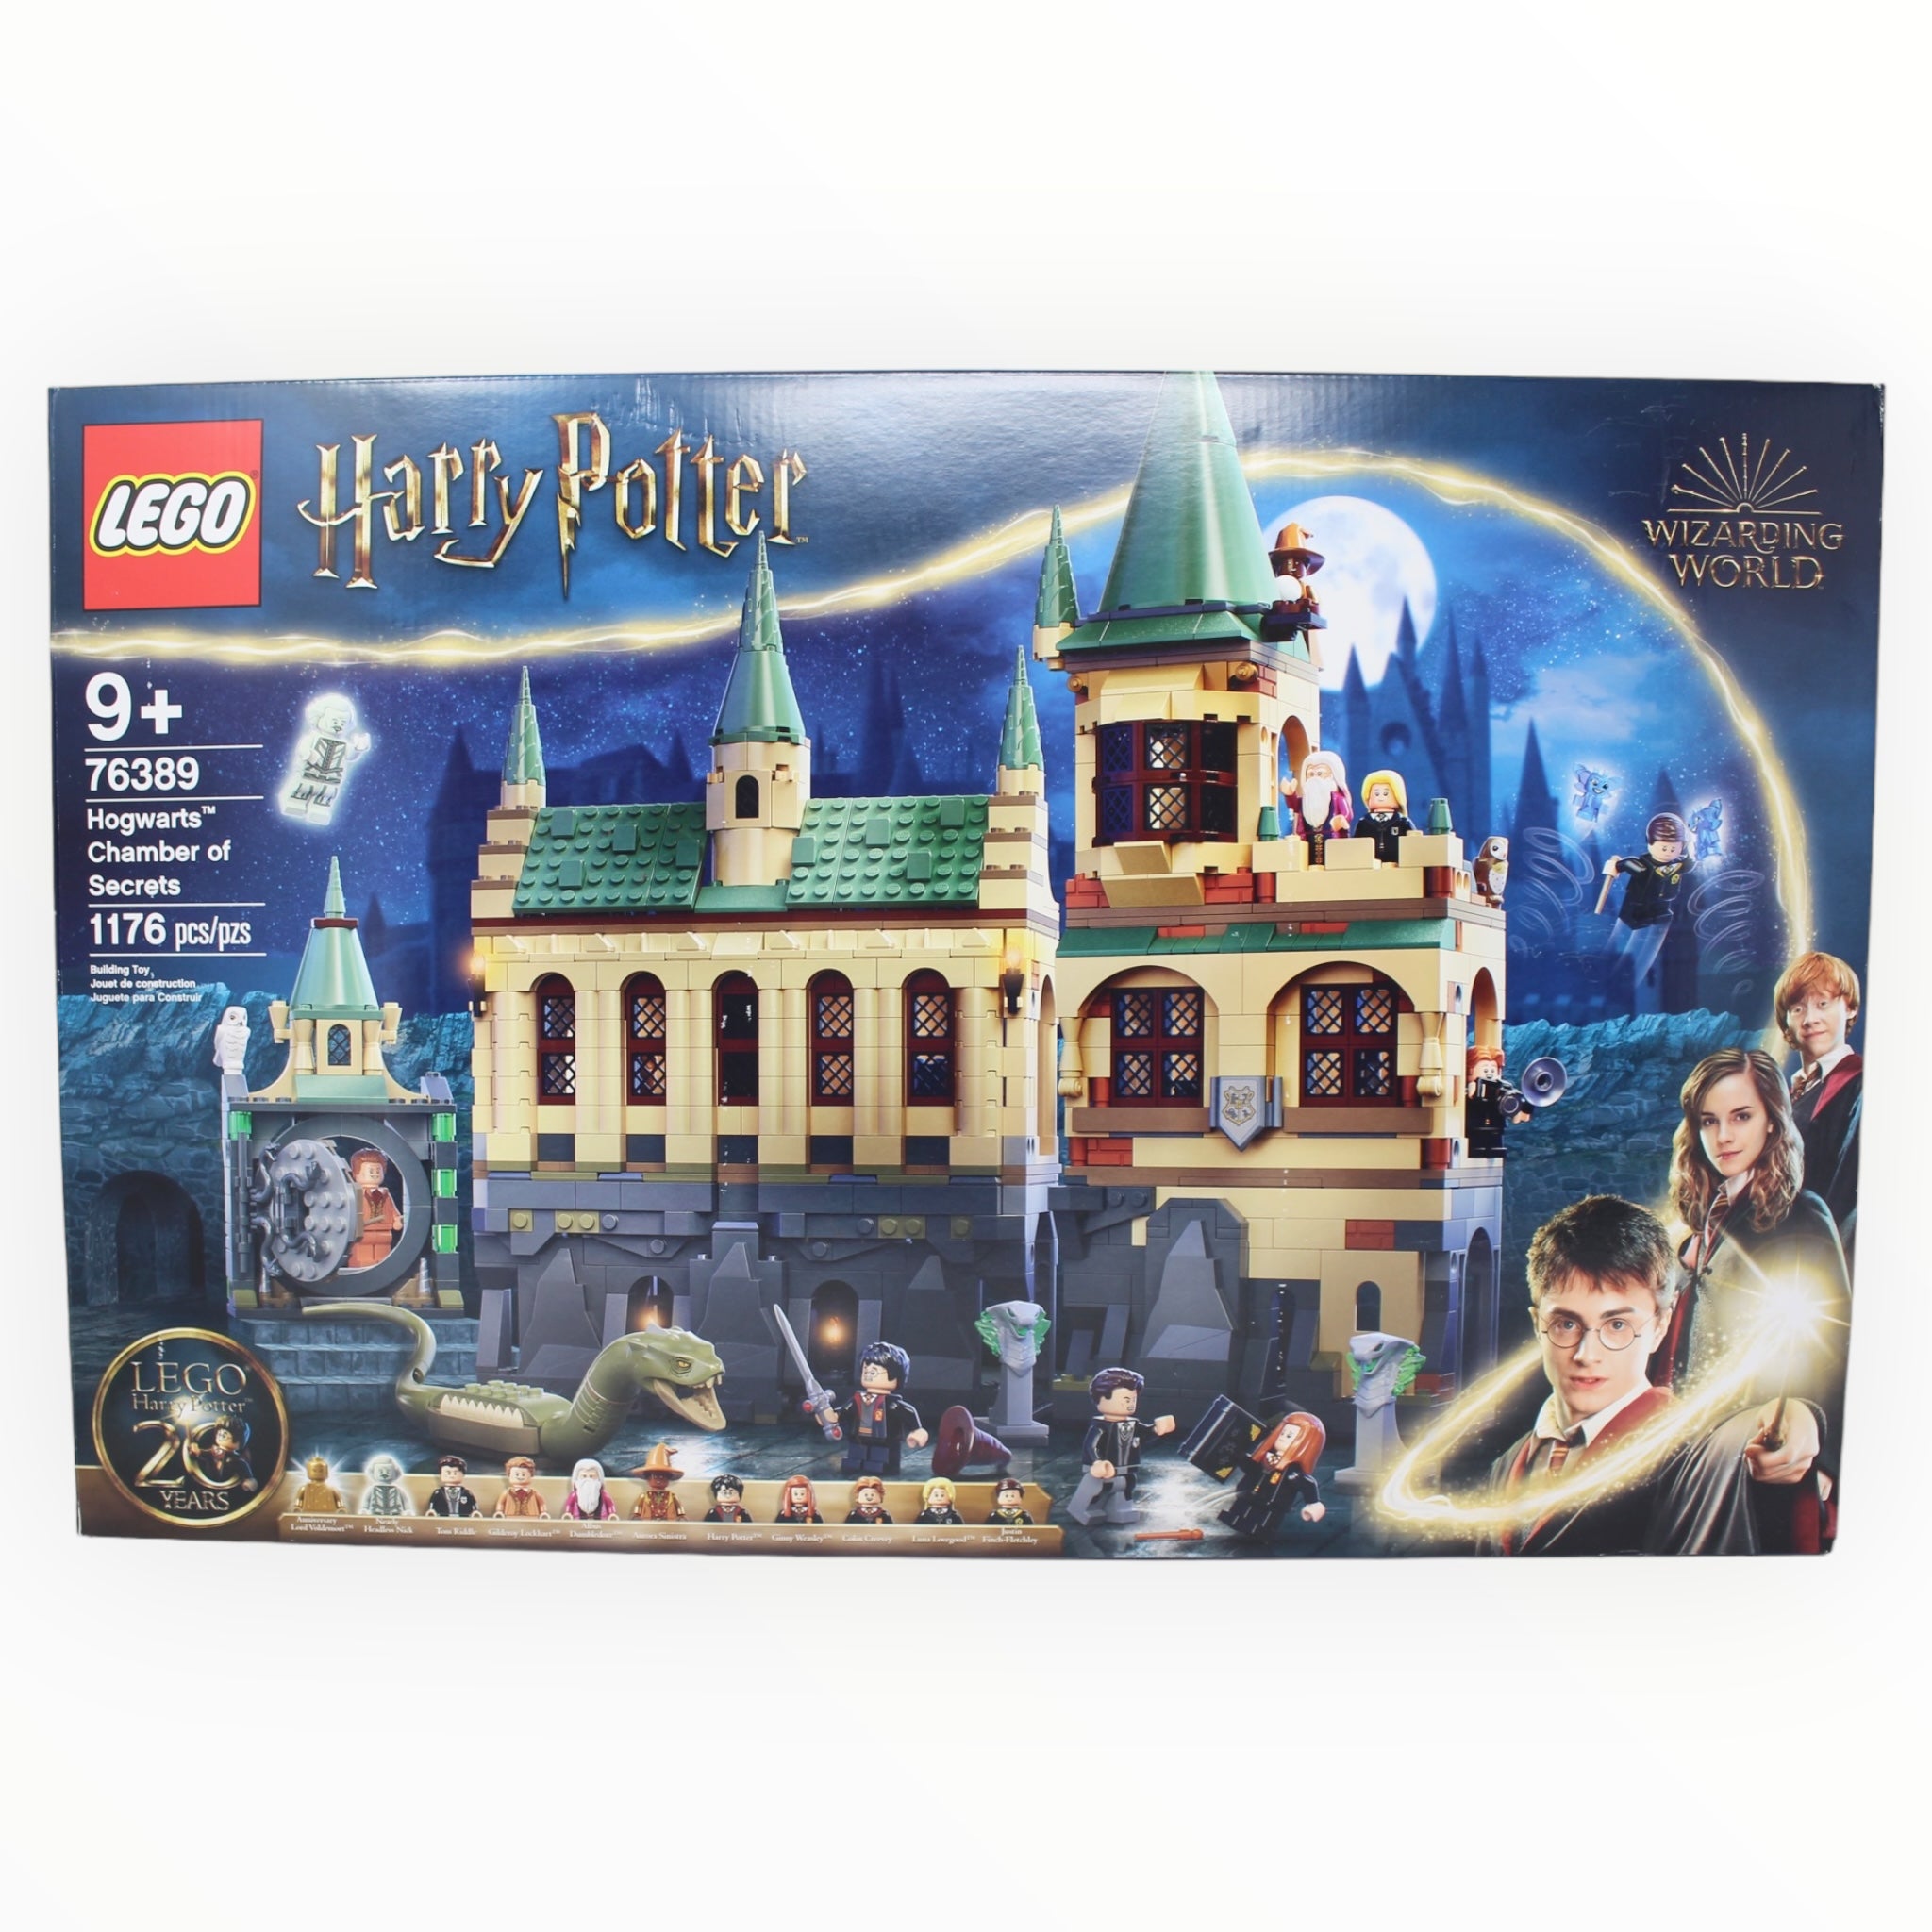 Certified Used Set 76389 Harry Potter Hogwarts Chamber of Secrets